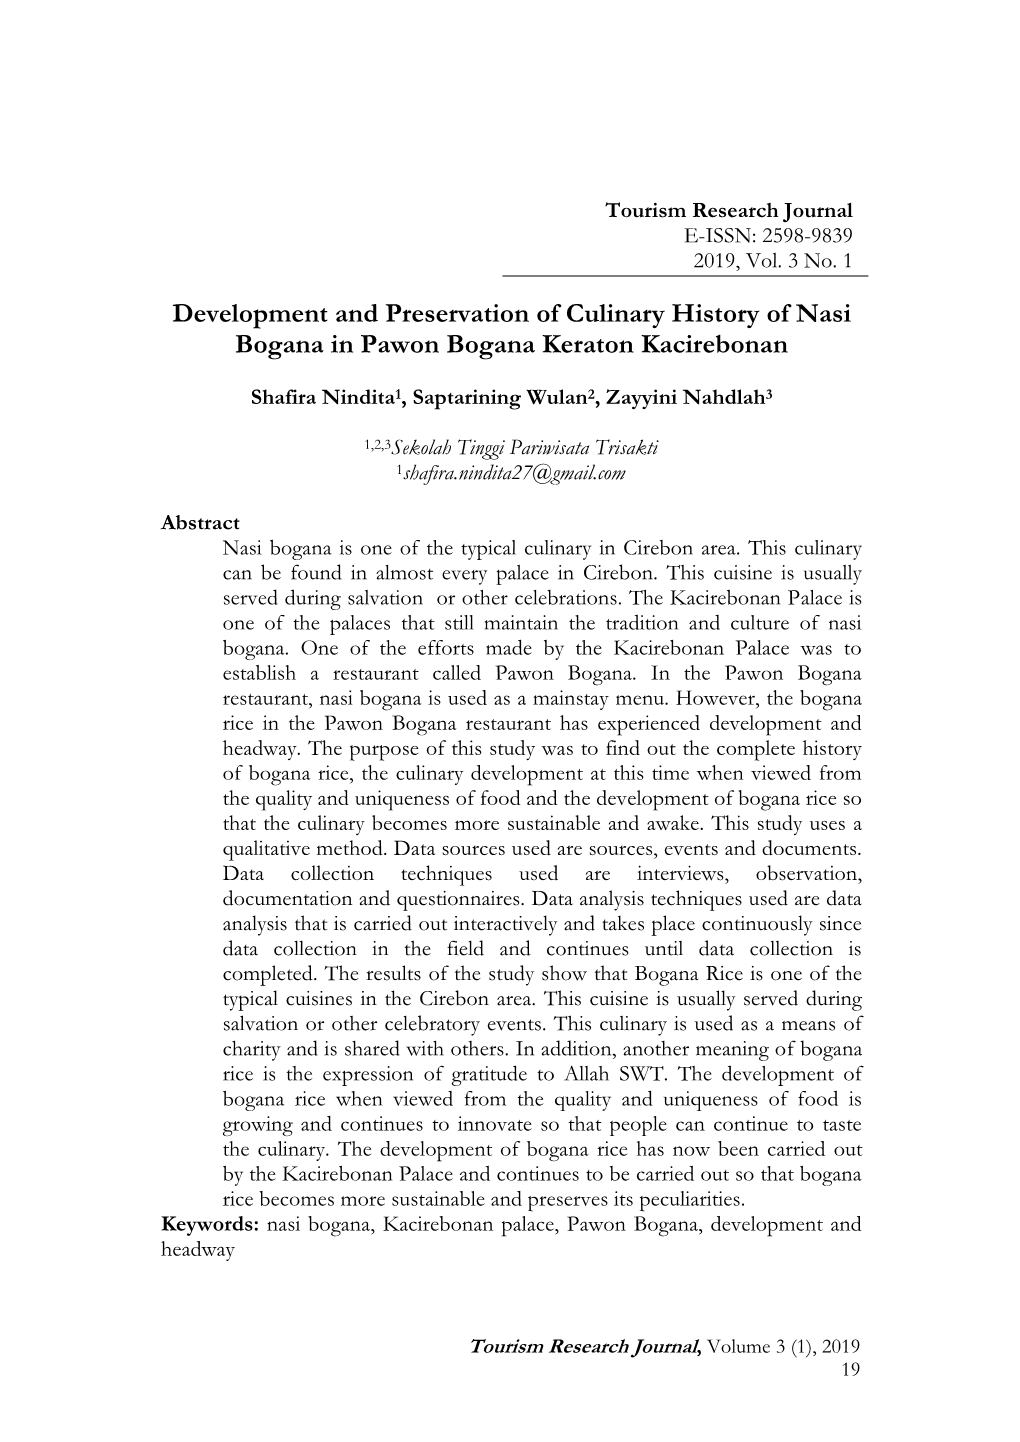 Development and Preservation of Culinary History of Nasi Bogana in Pawon Bogana Keraton Kacirebonan